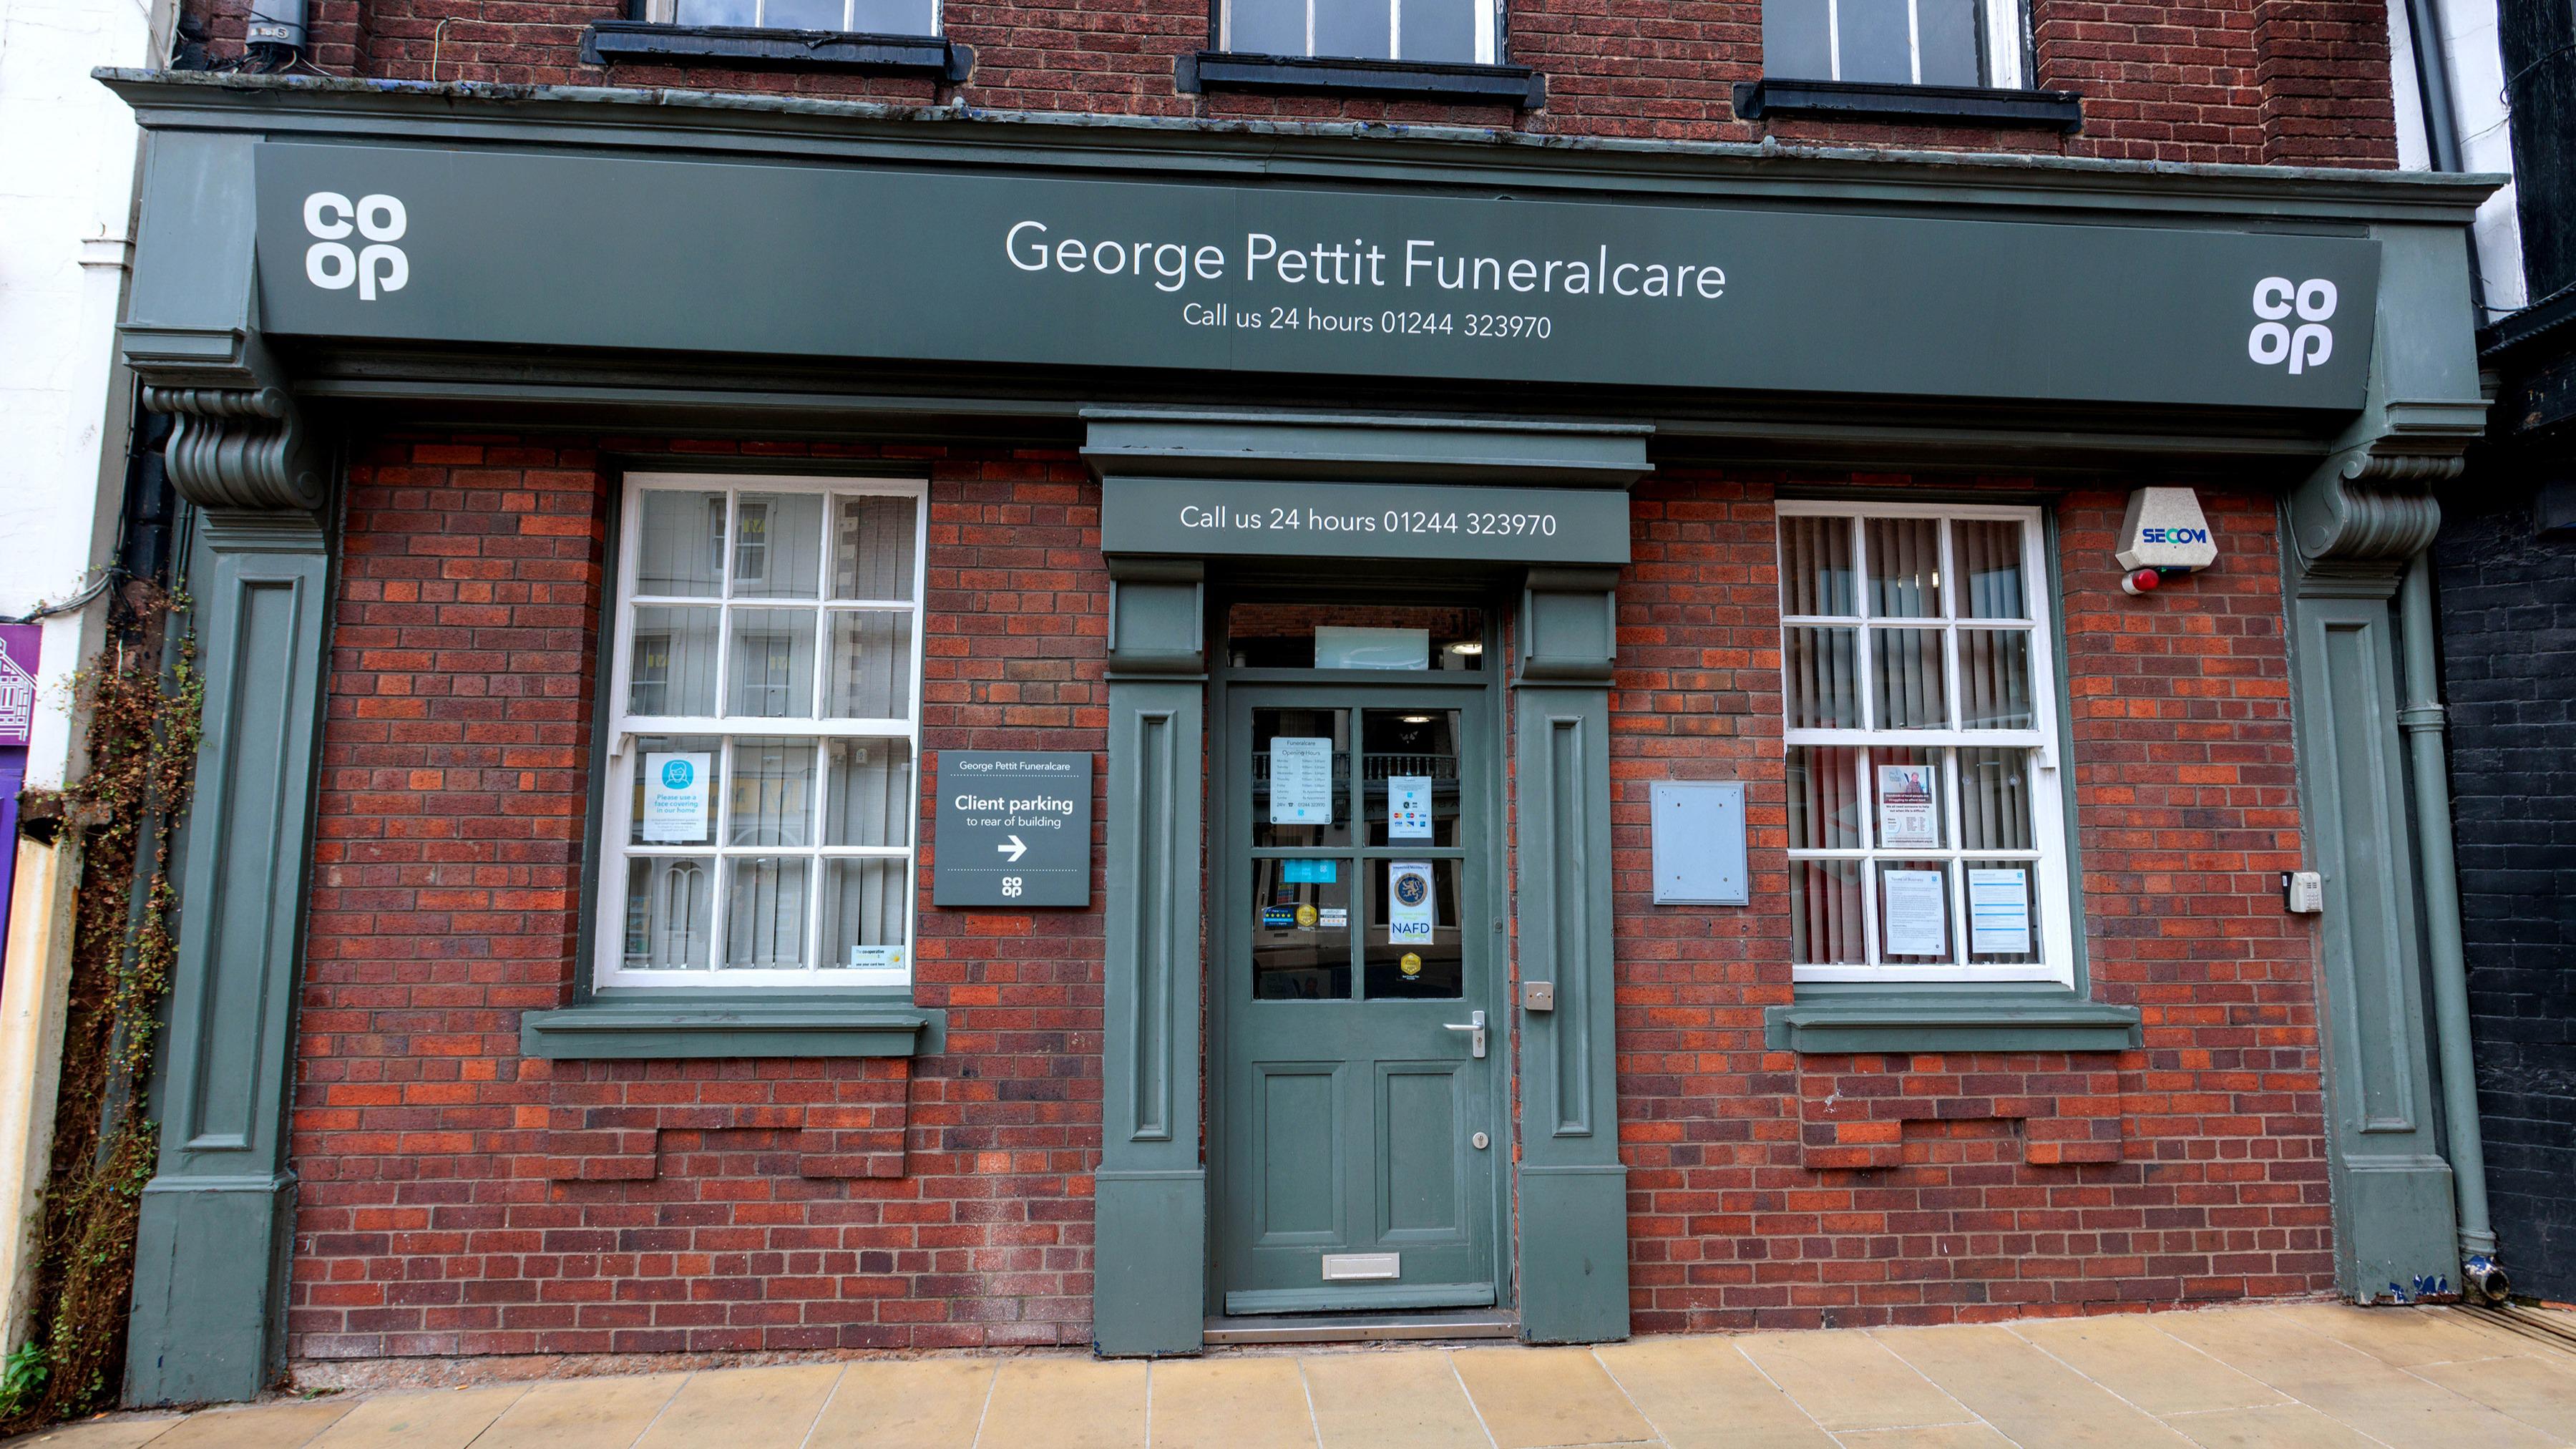 George Pettit Chester George Pettit Funeralcare Chester 01244 323970